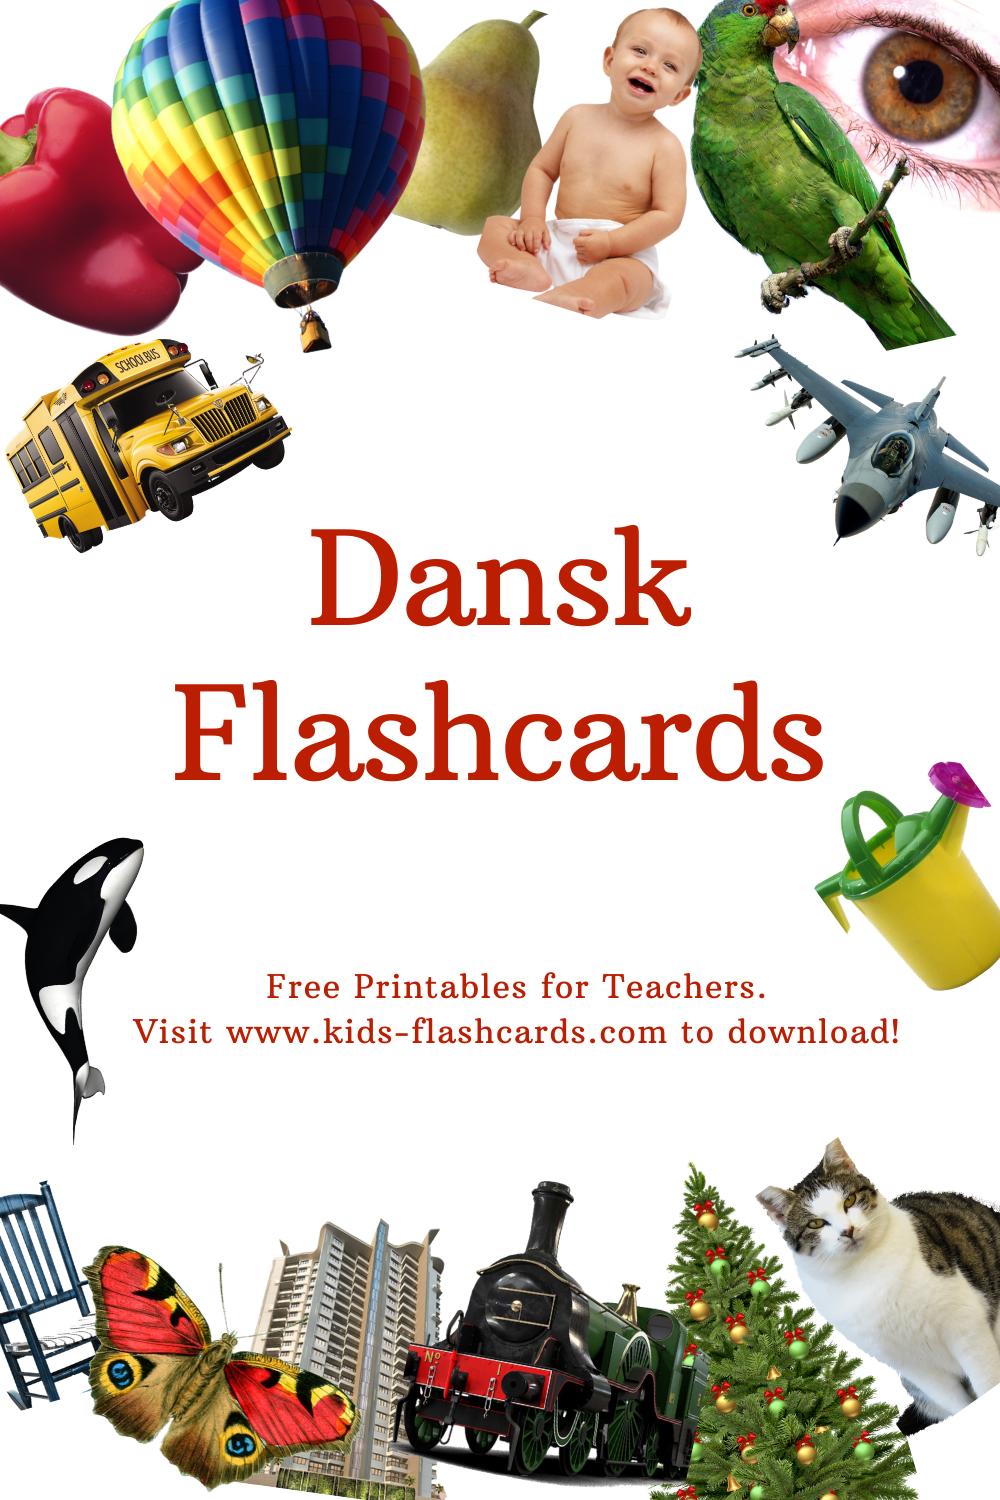 Worksheets to learn Dansk language